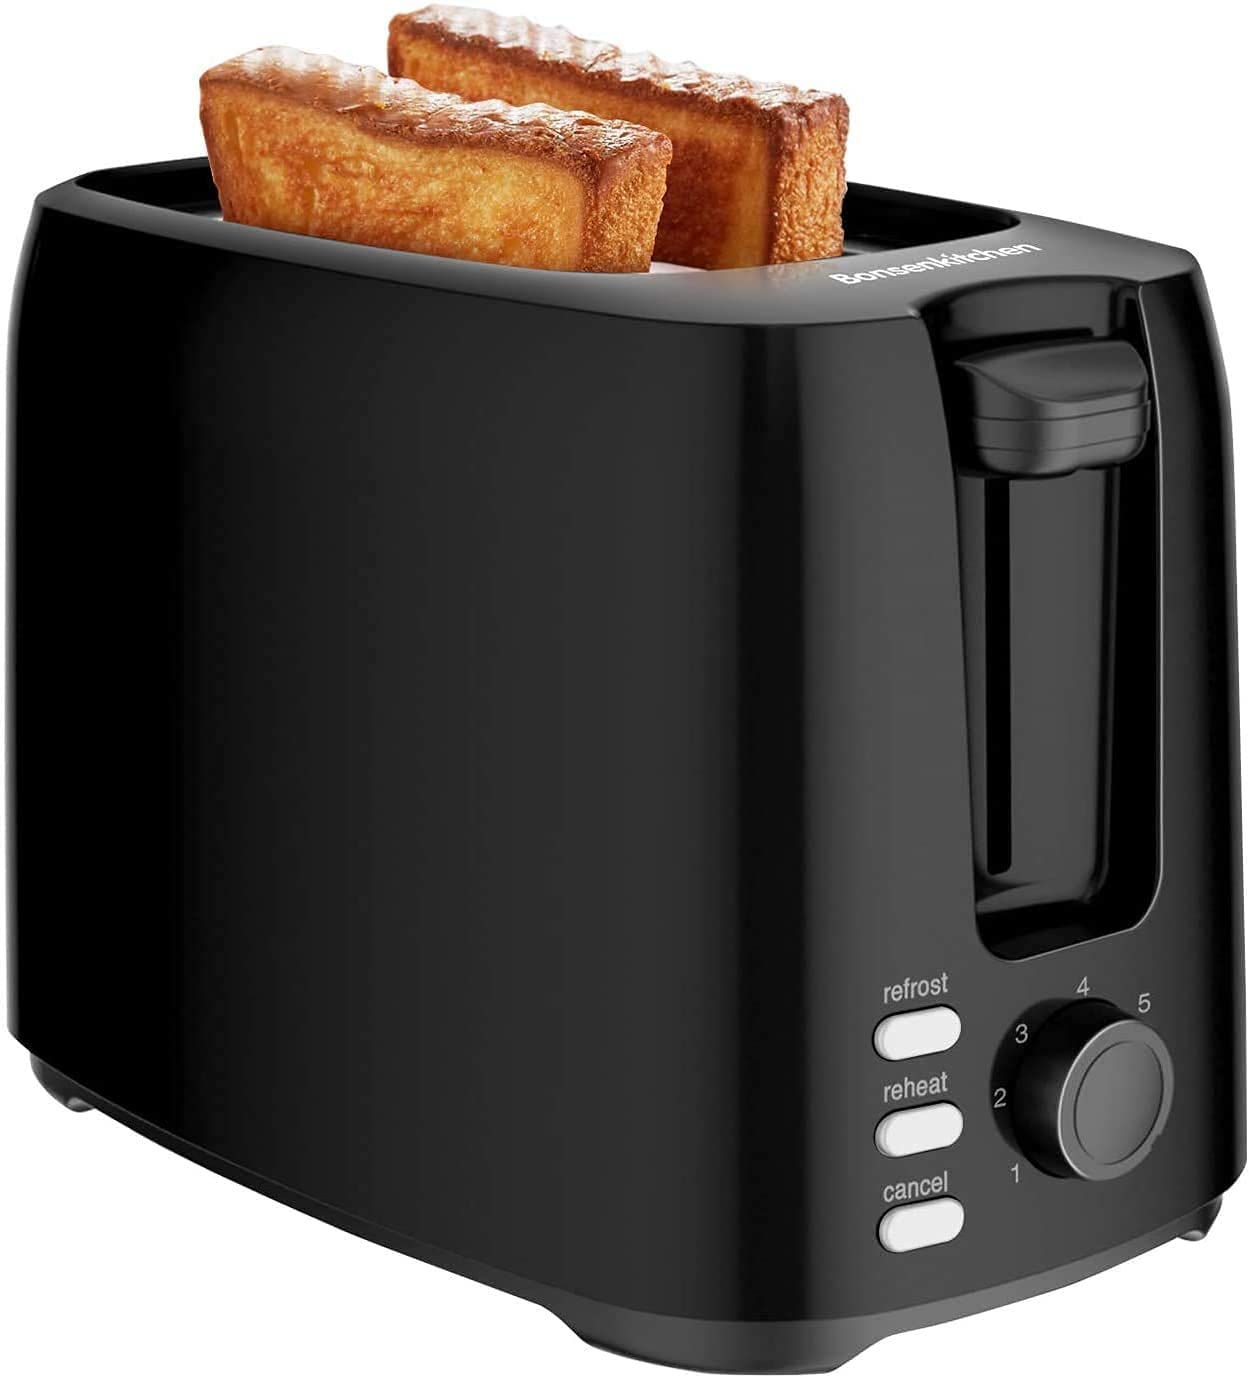 Bonsenkitchen Wide-Slot Multi-Function Pop-Up Toaster, 2-Slice